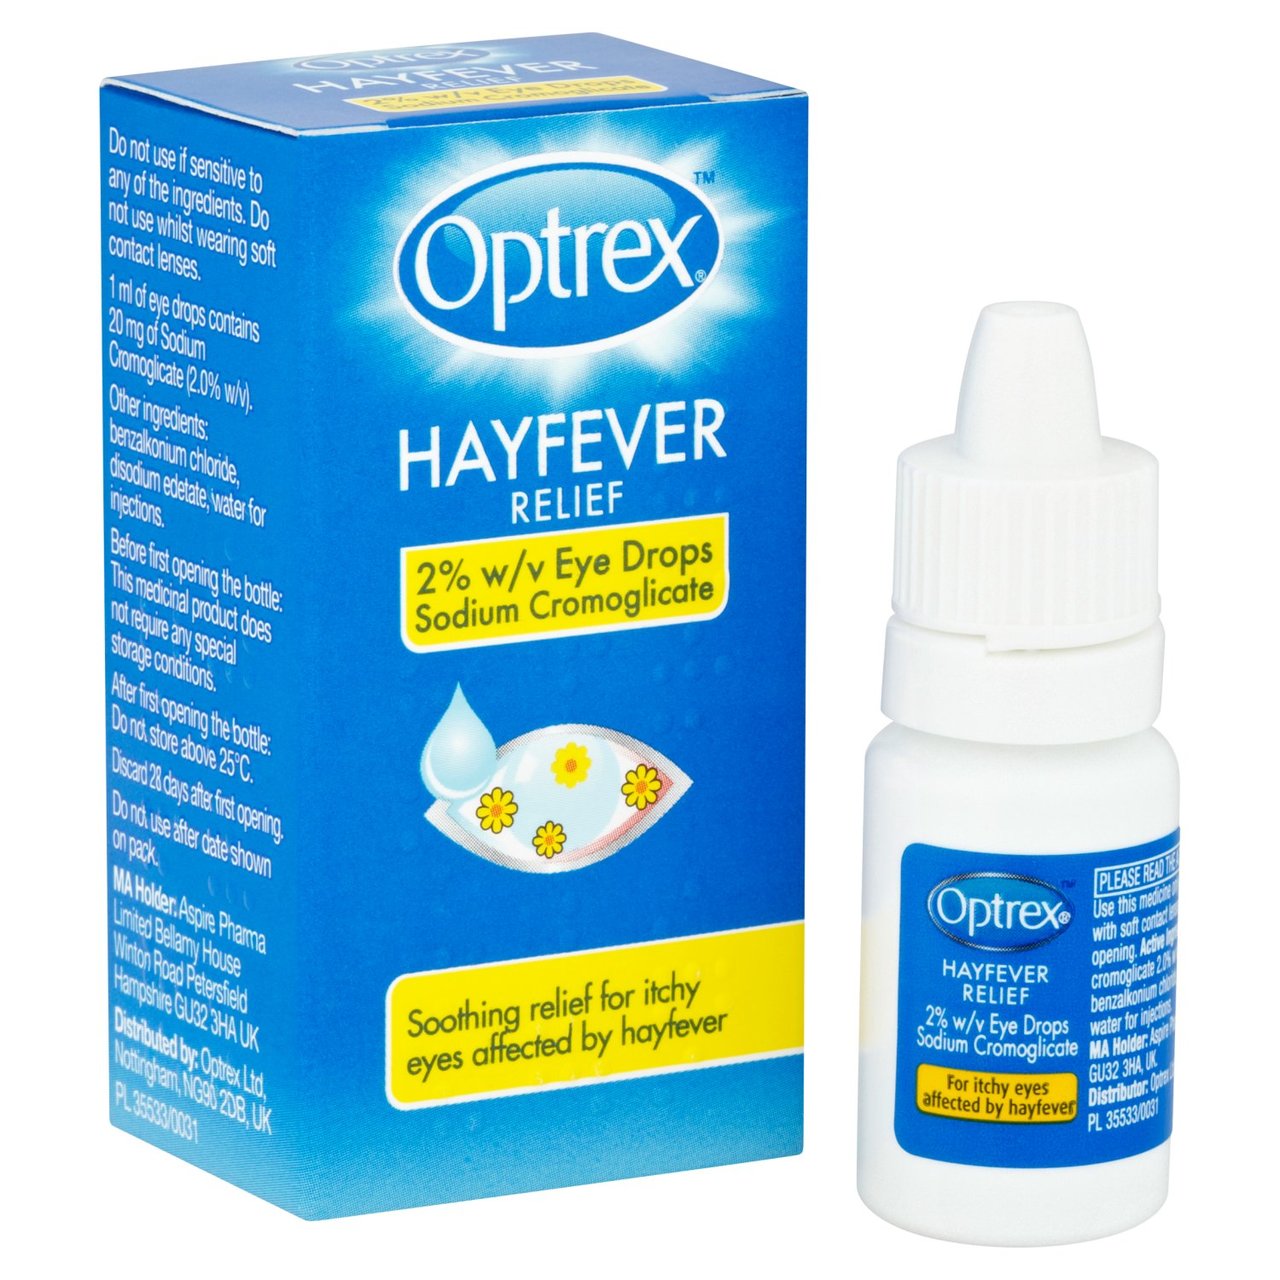 Optrex Hayfever Relief 2% w/v Eye Drops Sodium Cromoglicate 10ml